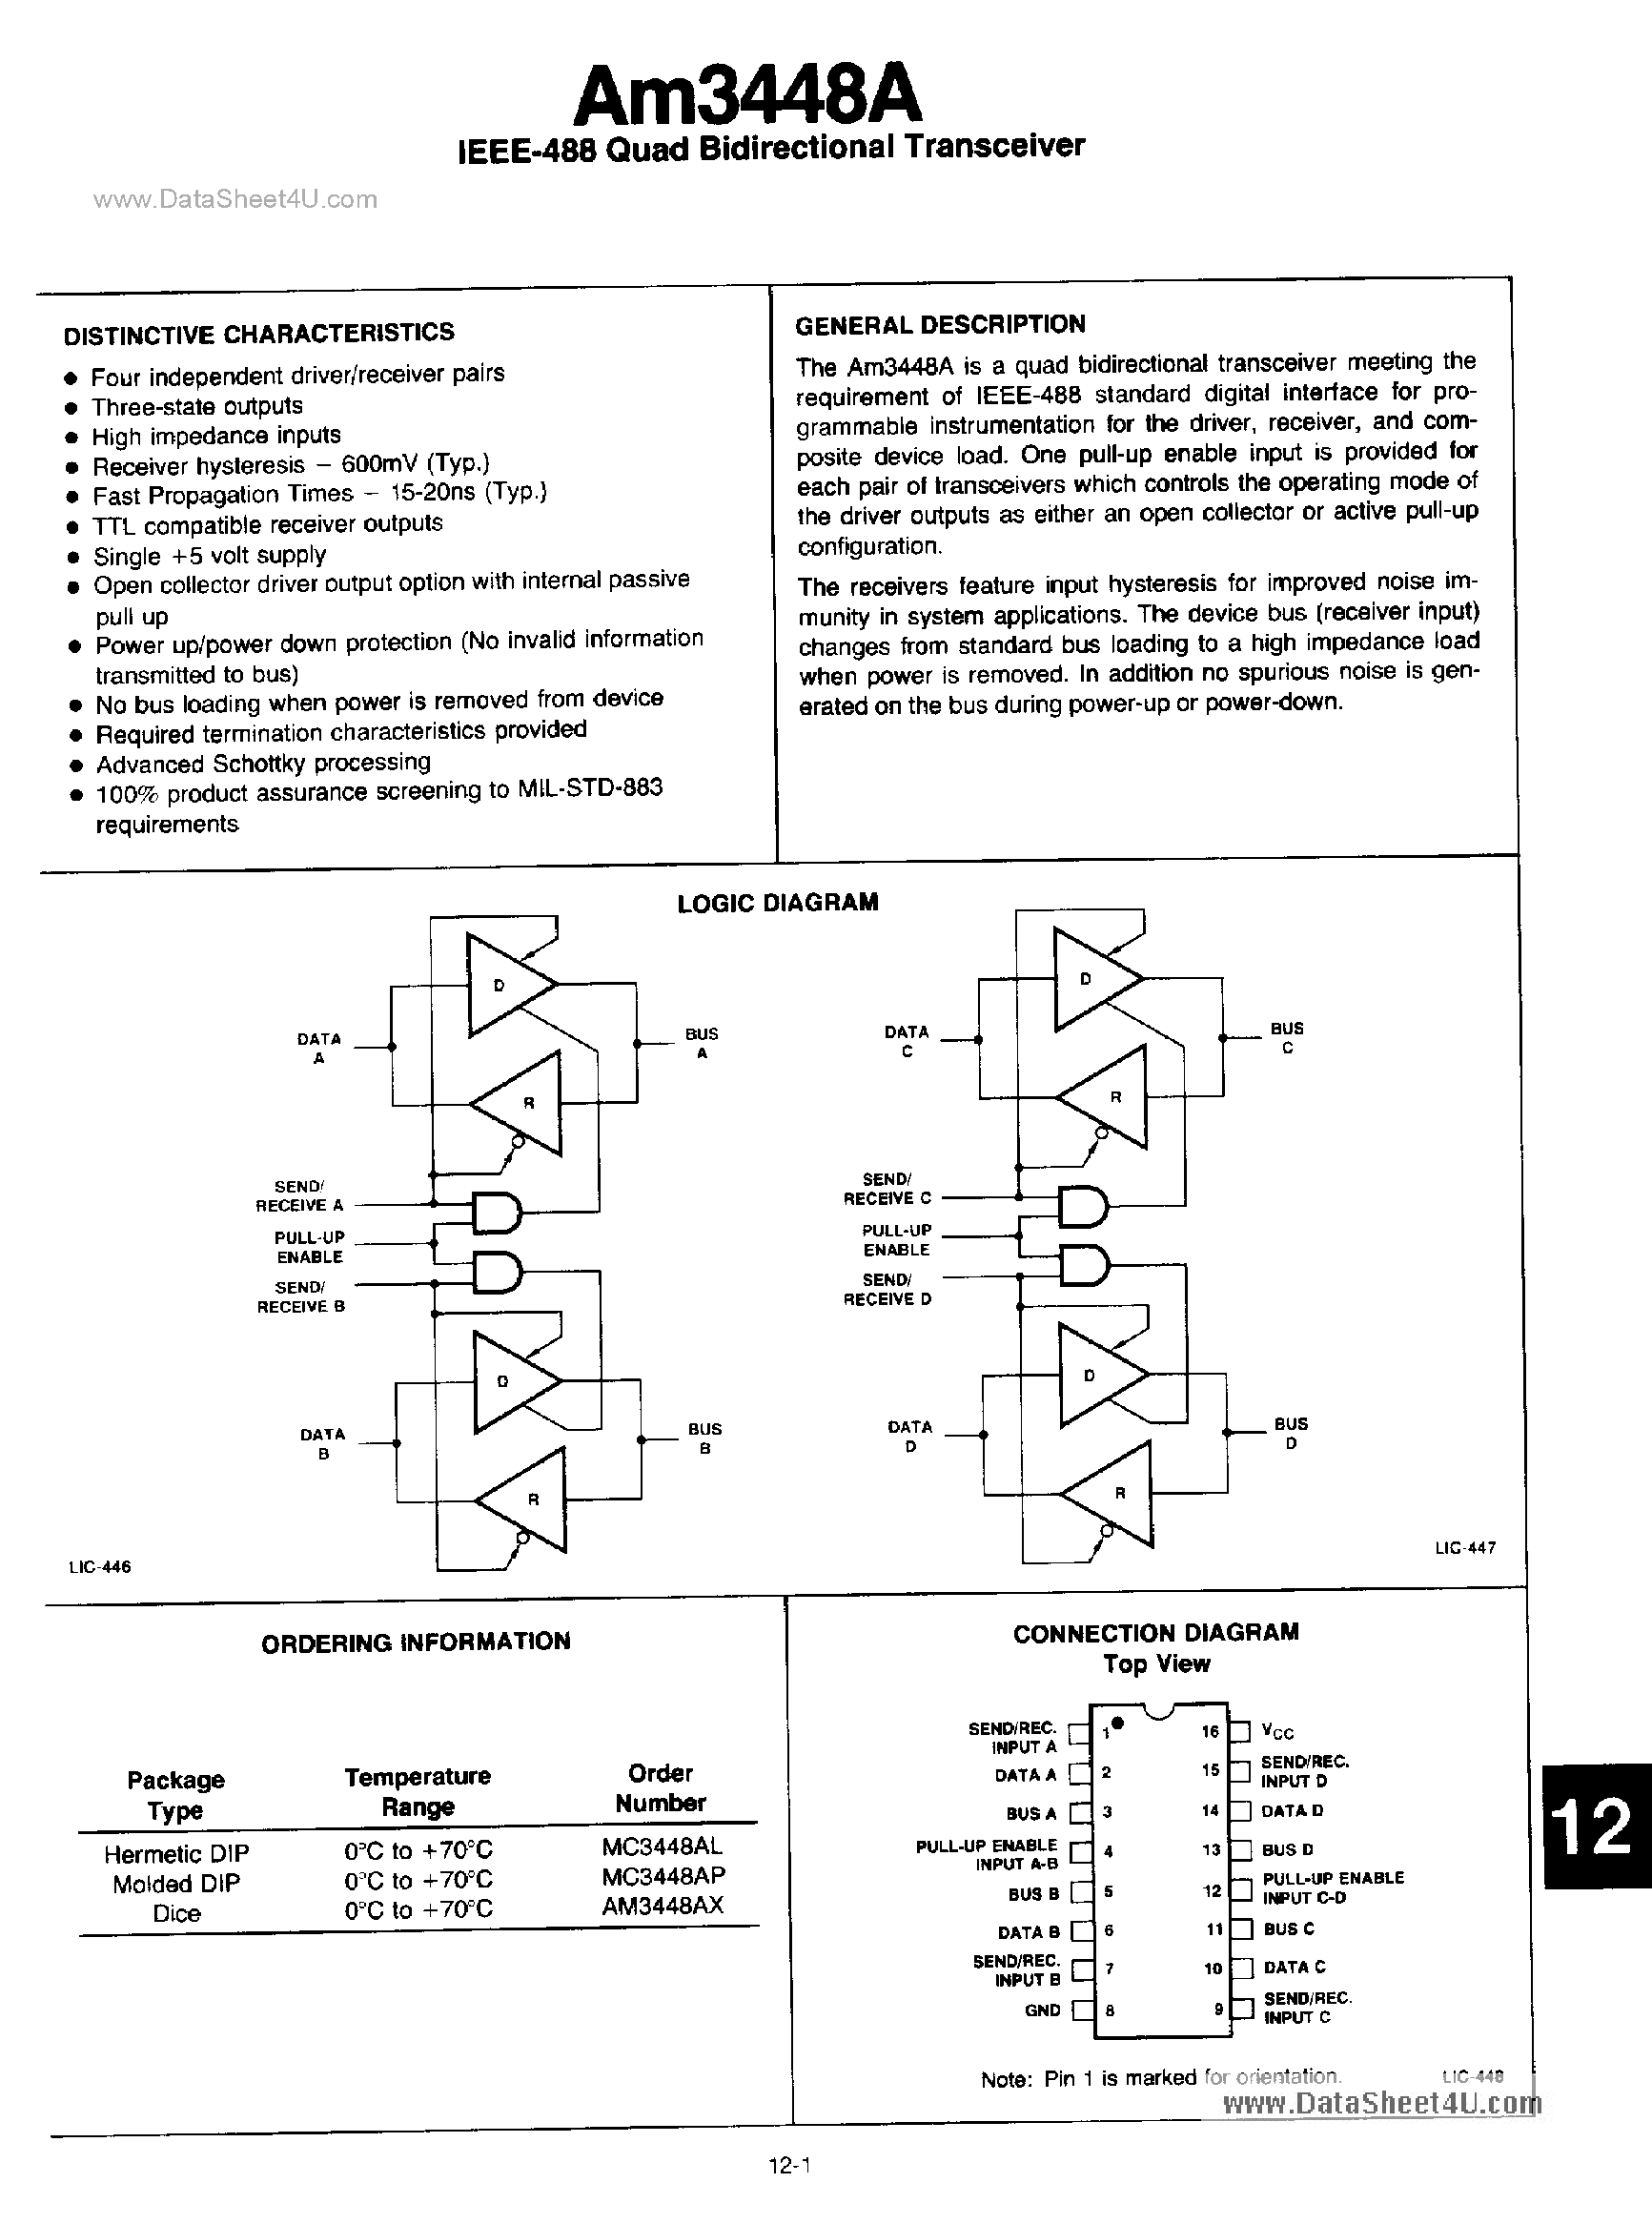 Даташит AM3448A-IEEE-488 QUAD BIDIRECTIONAL TRANSCEIVER страница 1